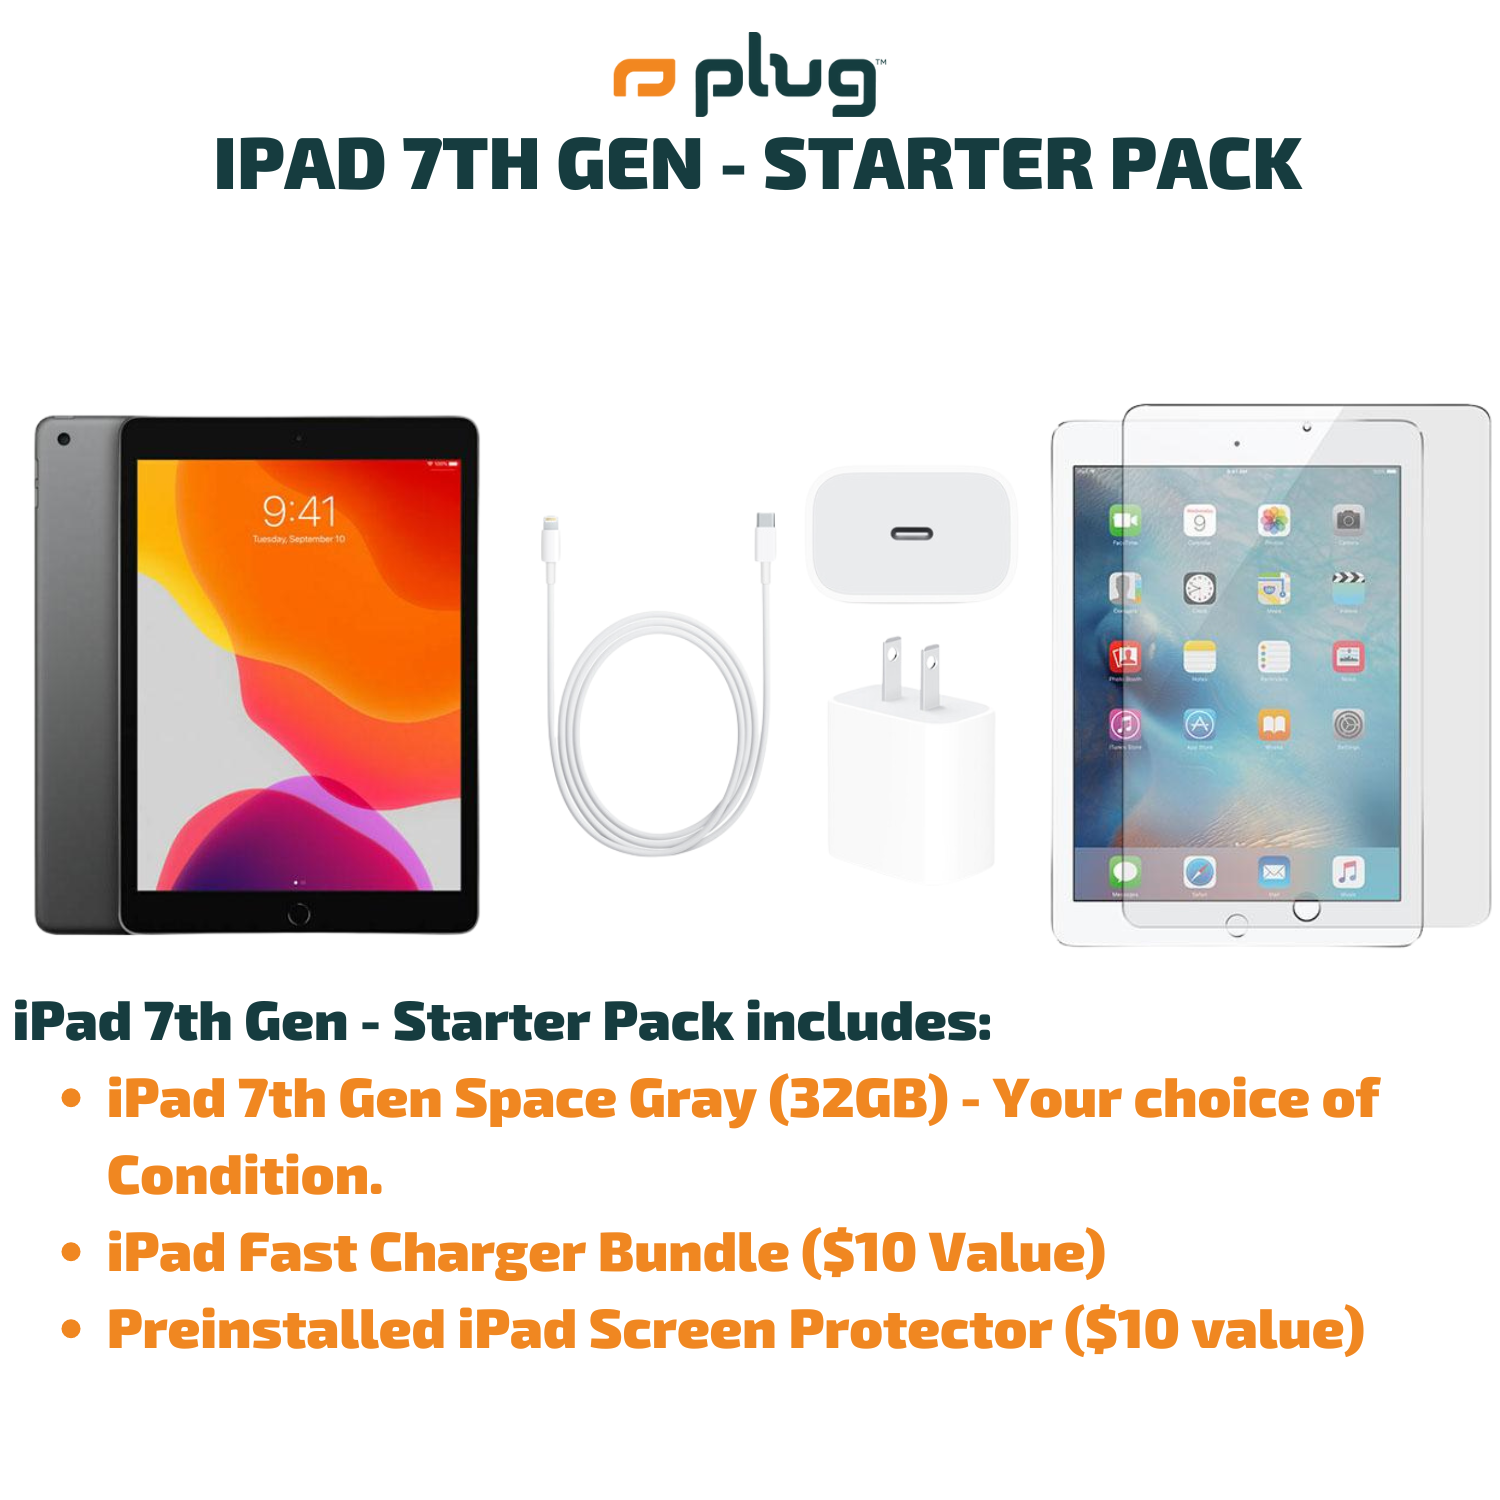 iPad 7th Gen (10.2") - Starter Pack